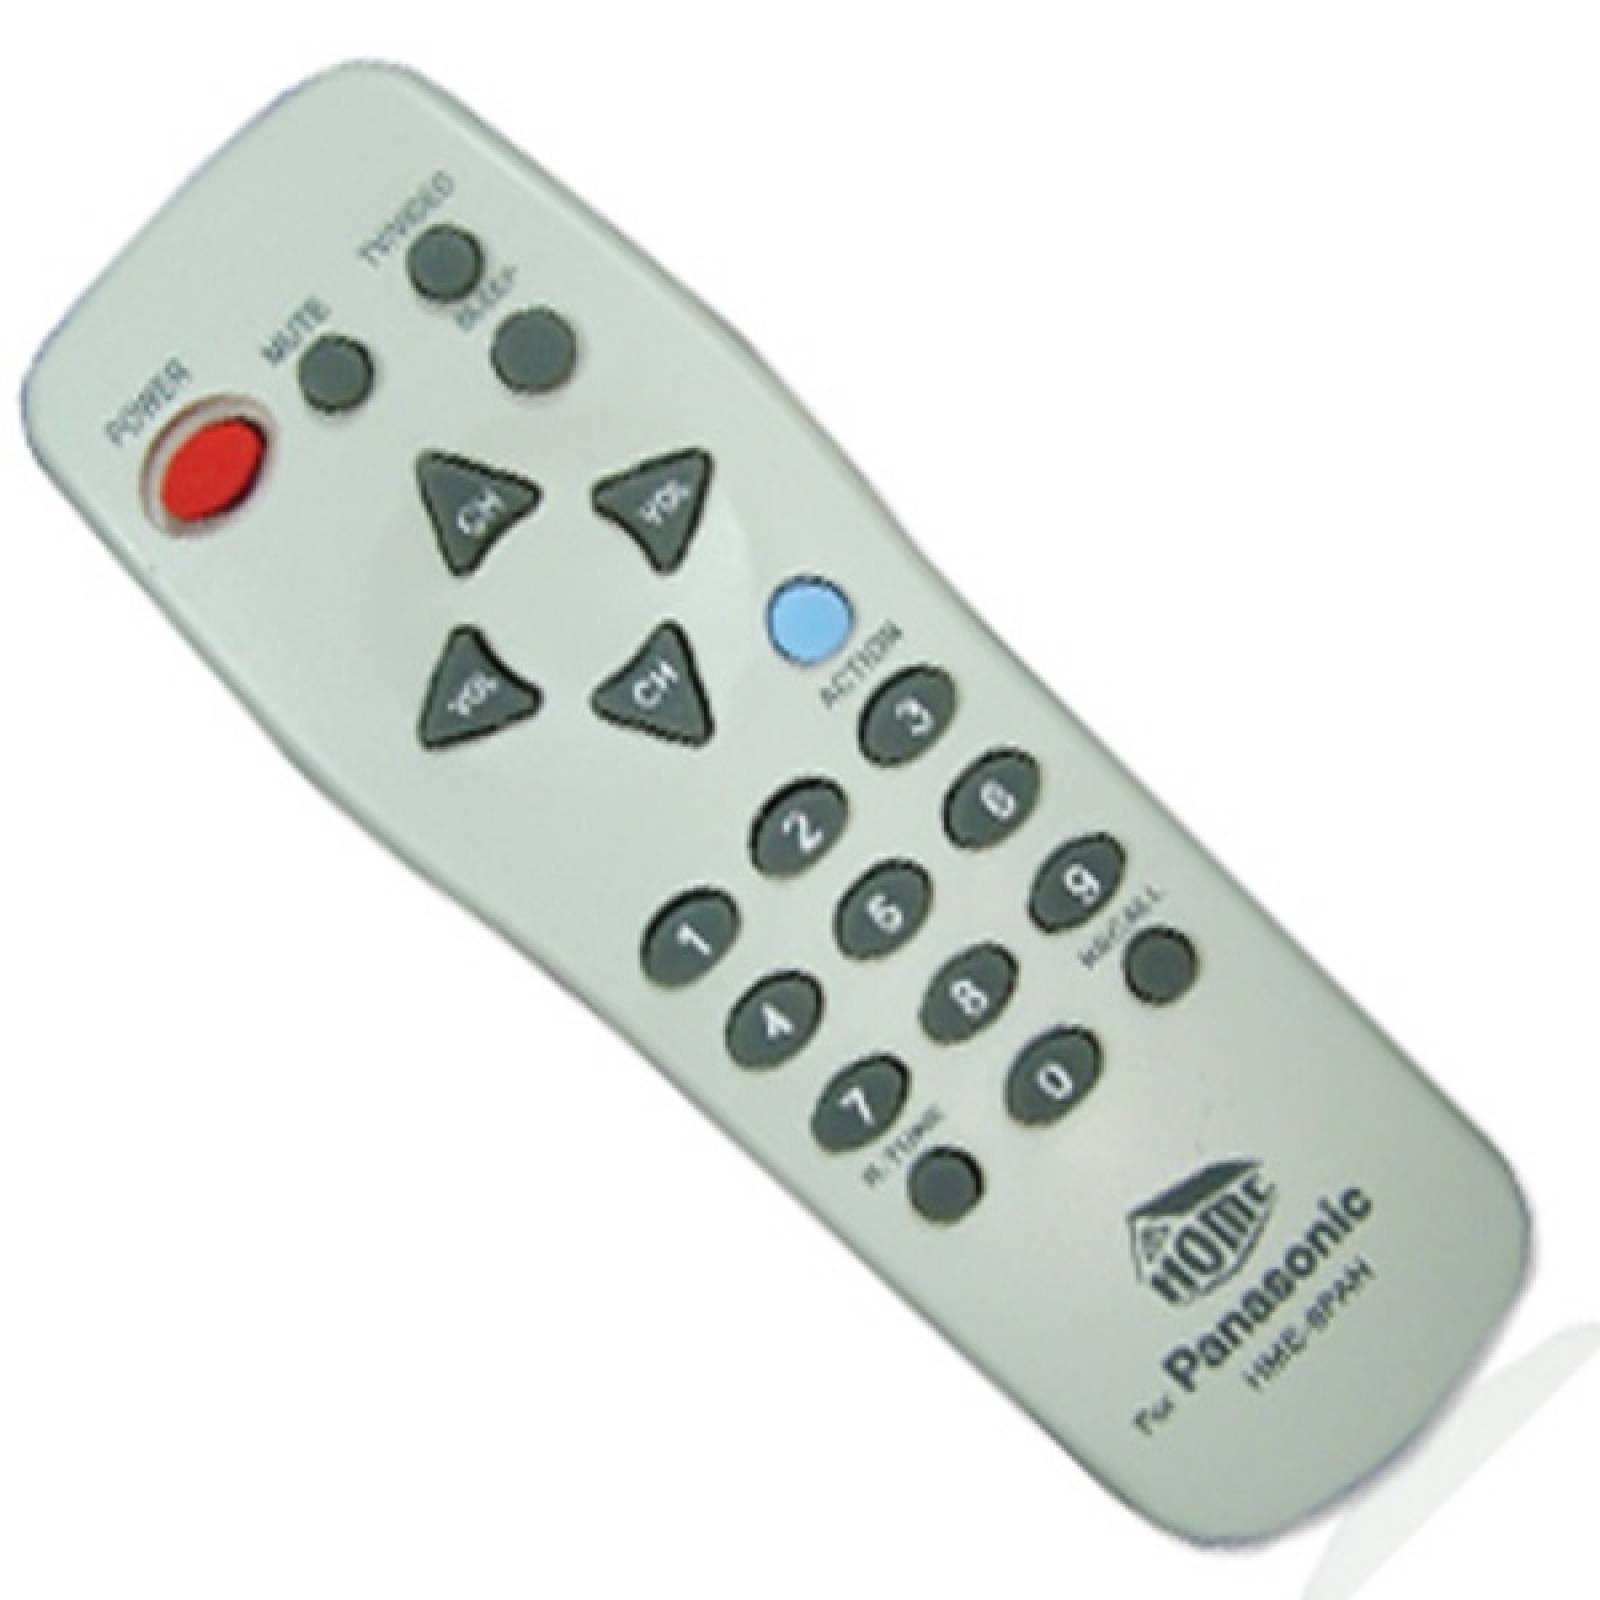 Control remoto TV Master Para Marca Panasonic HME-6PAN